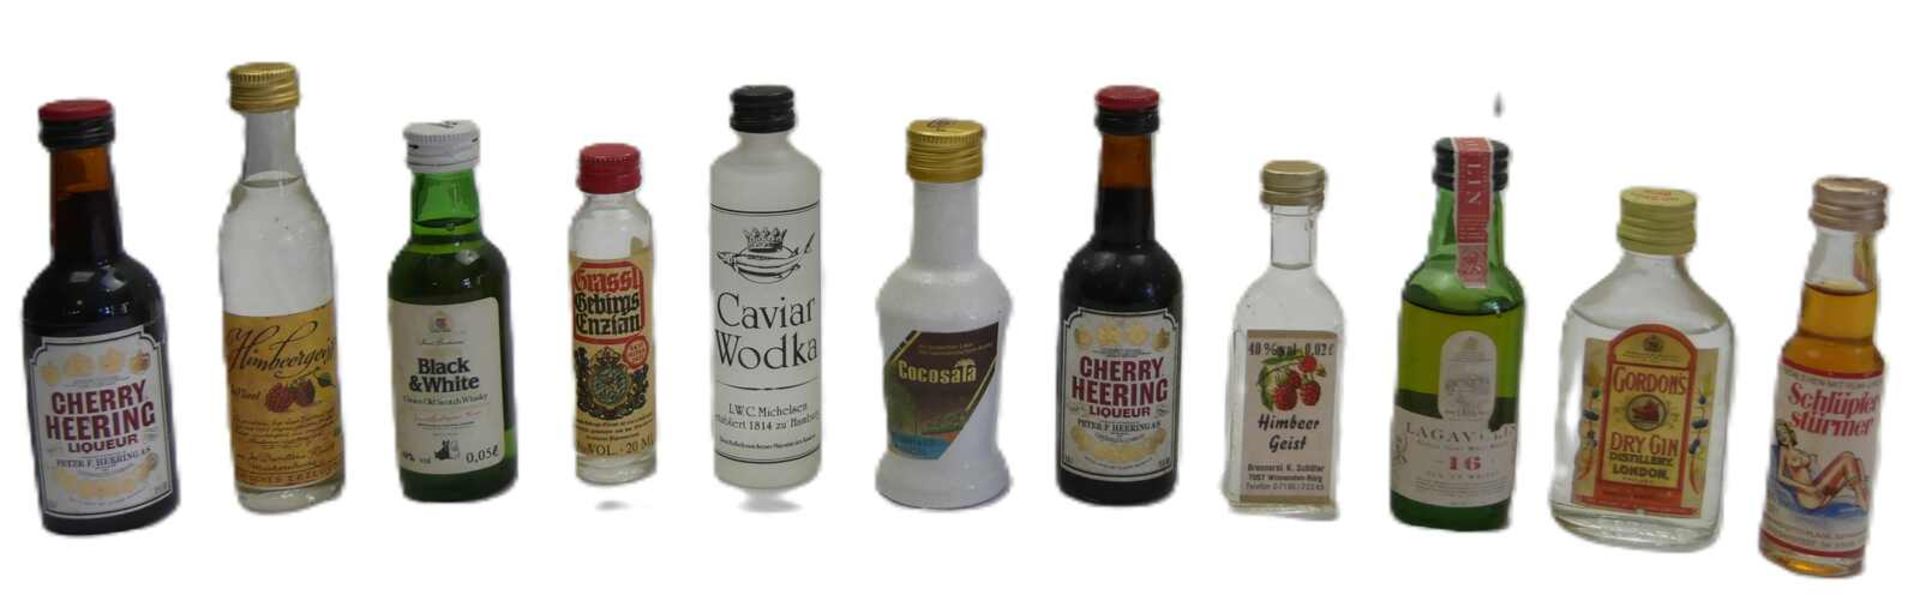 Lot "mini" Spirituosen verschiedene Sorten, dabei Caviar Wodka, Cherry Heering Liqueur, Grassl